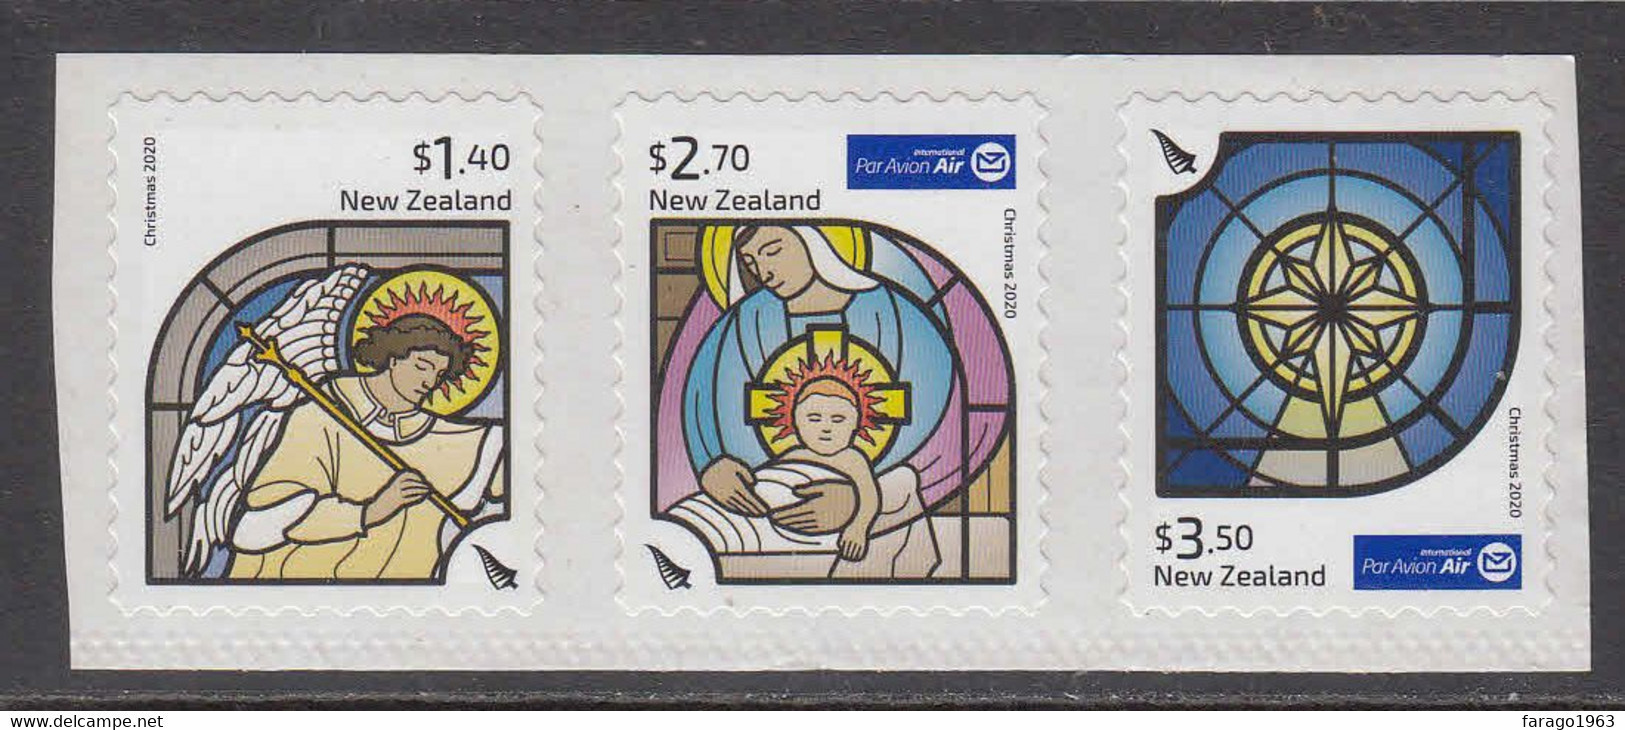 2020 New Zealand Christmas Noel Navidad Complete Set Of 3 MNH @ BELOW FACE VALUE - Unused Stamps